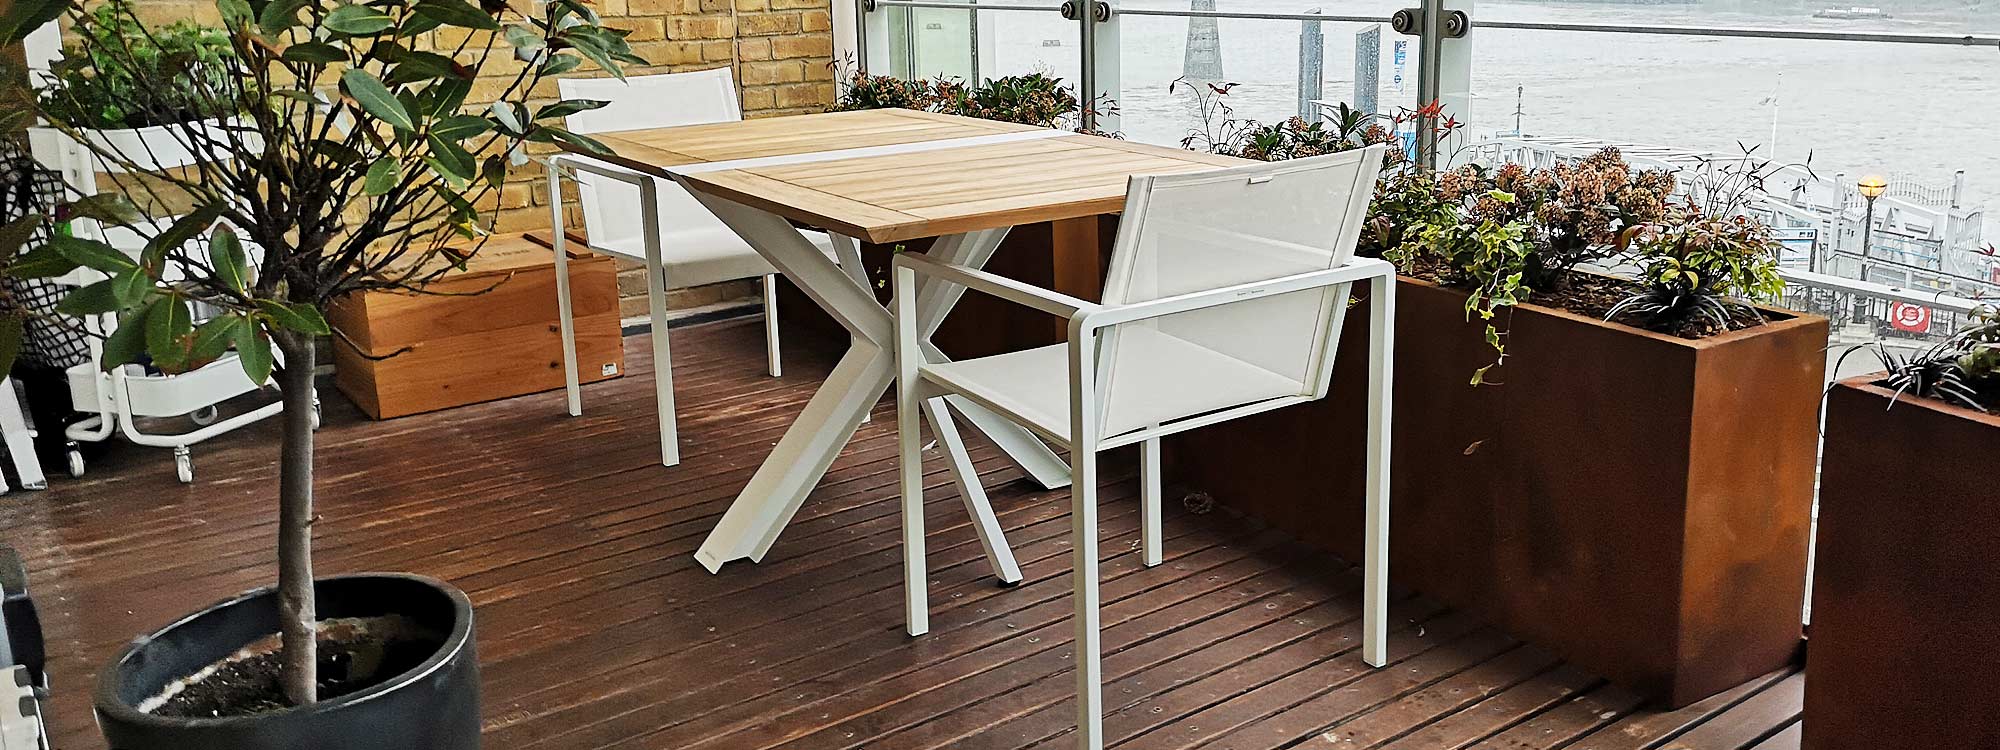 London Modern Rooftop Terrace Furniture Installation Of Traverse Folding Garden Table & Alura Stacking Garden Chairs. Royal Botania Luxury Garden Furniture.